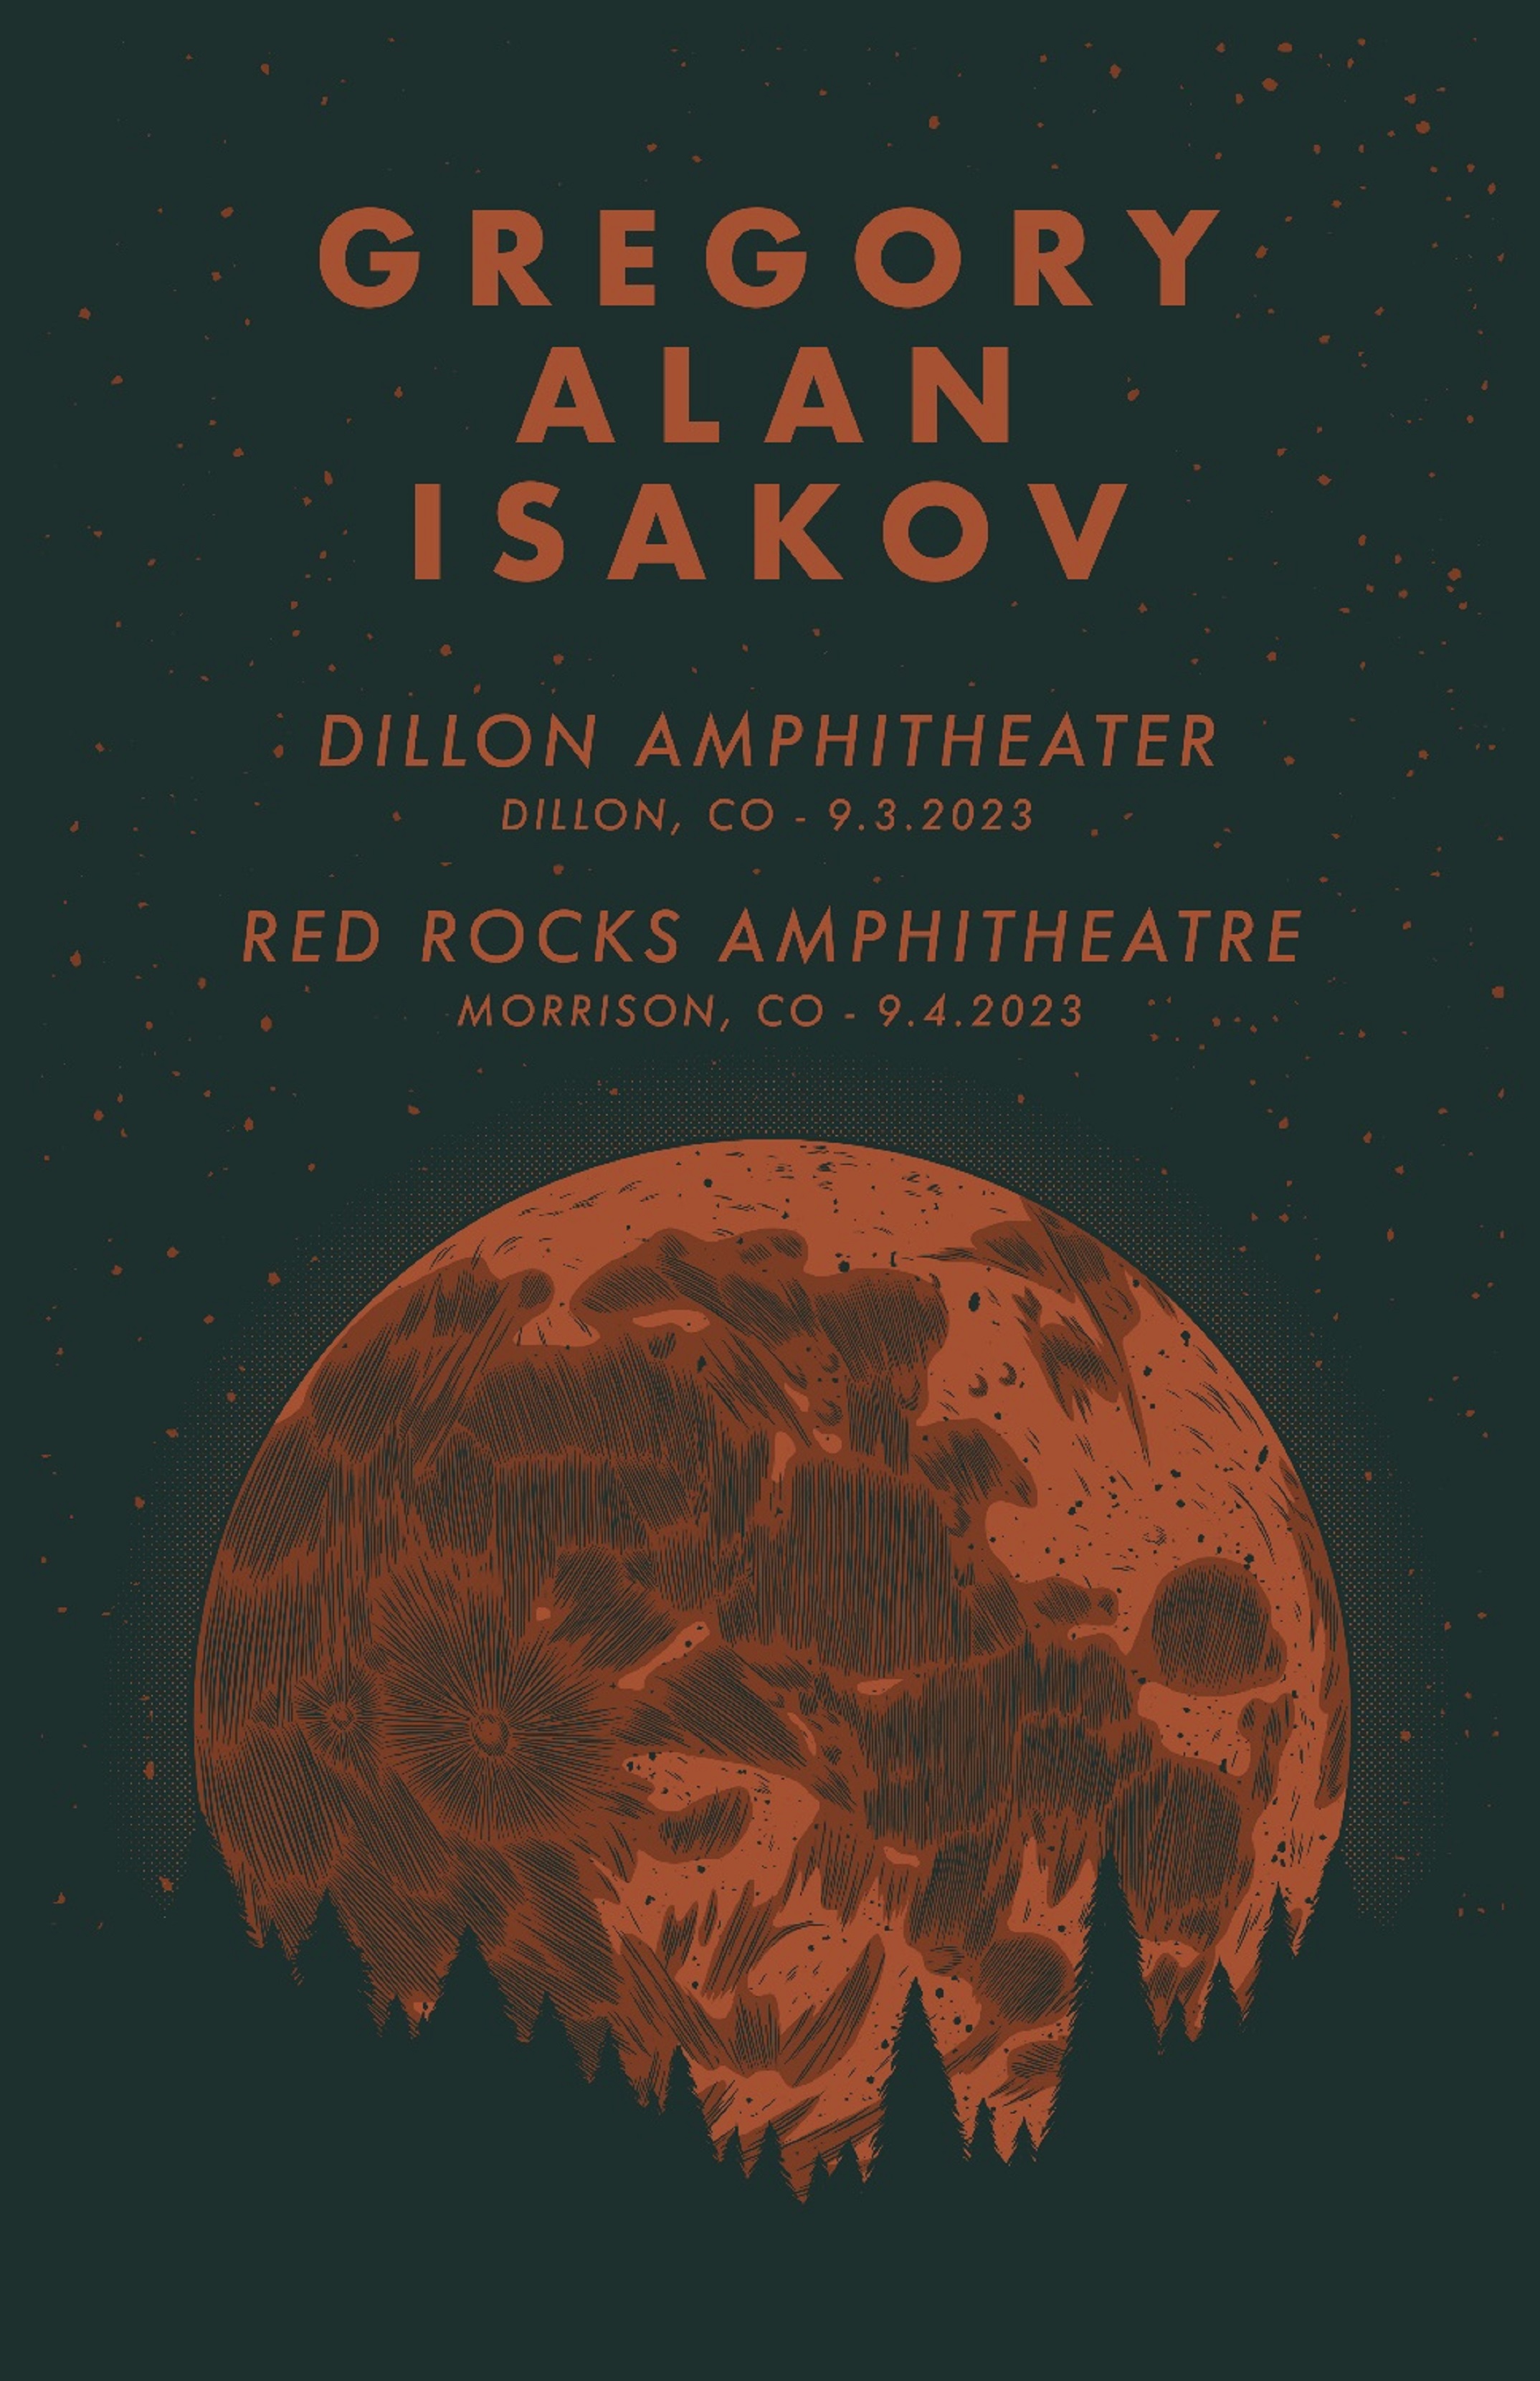 GREGORY ALAN ISAKOV - Dillon Amphitheater Sept 3, 2023 & Red Rocks Amphitheatre Sept 4, 2023